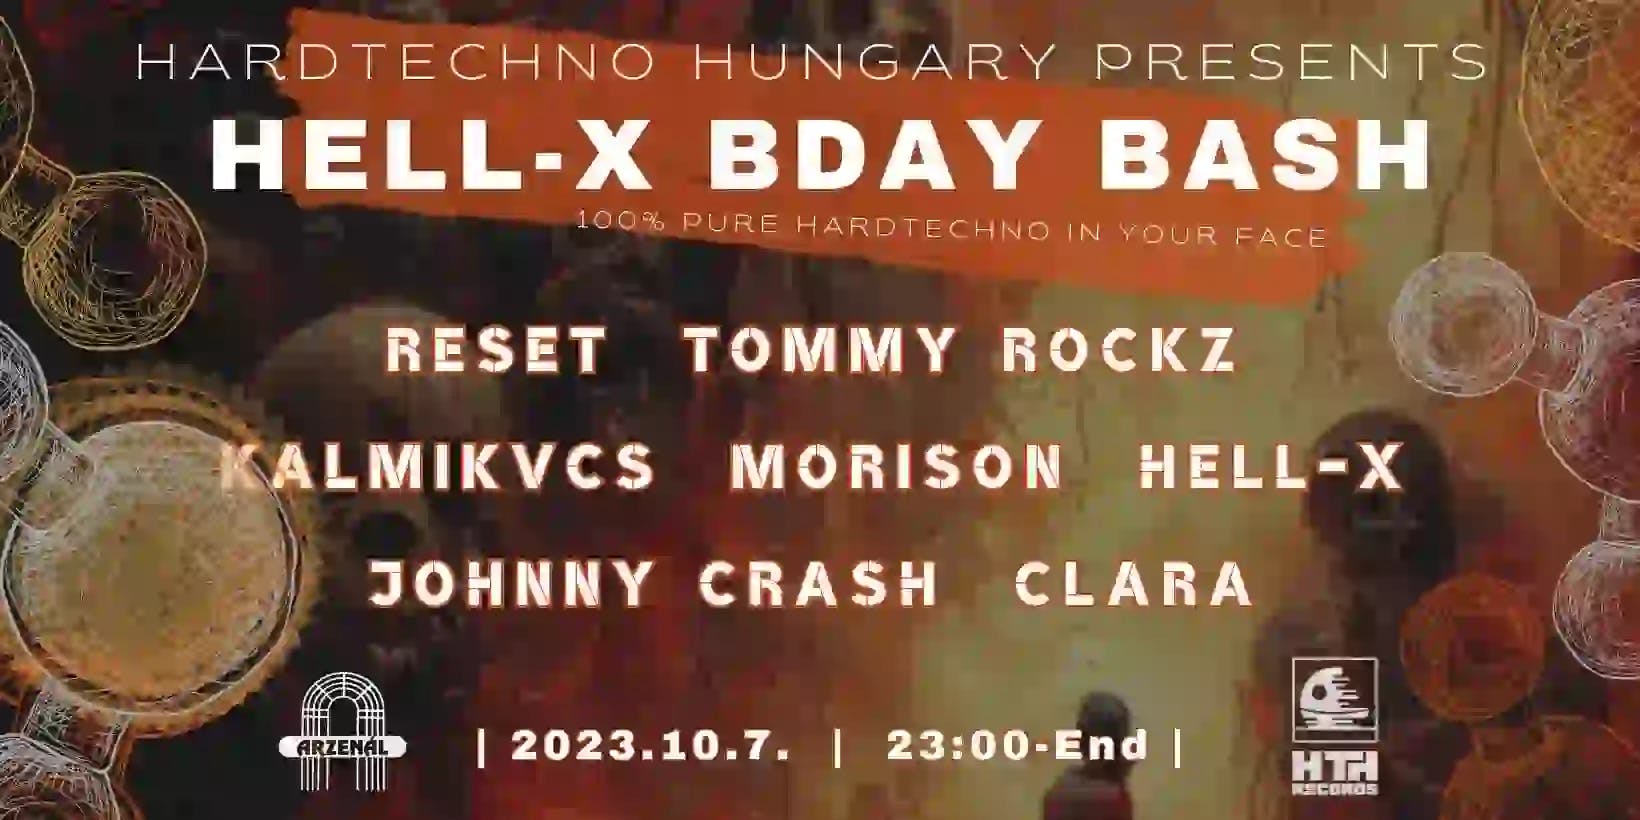 Esemény képe: HardTechno Hungary Presents Hell-X Bday Bash